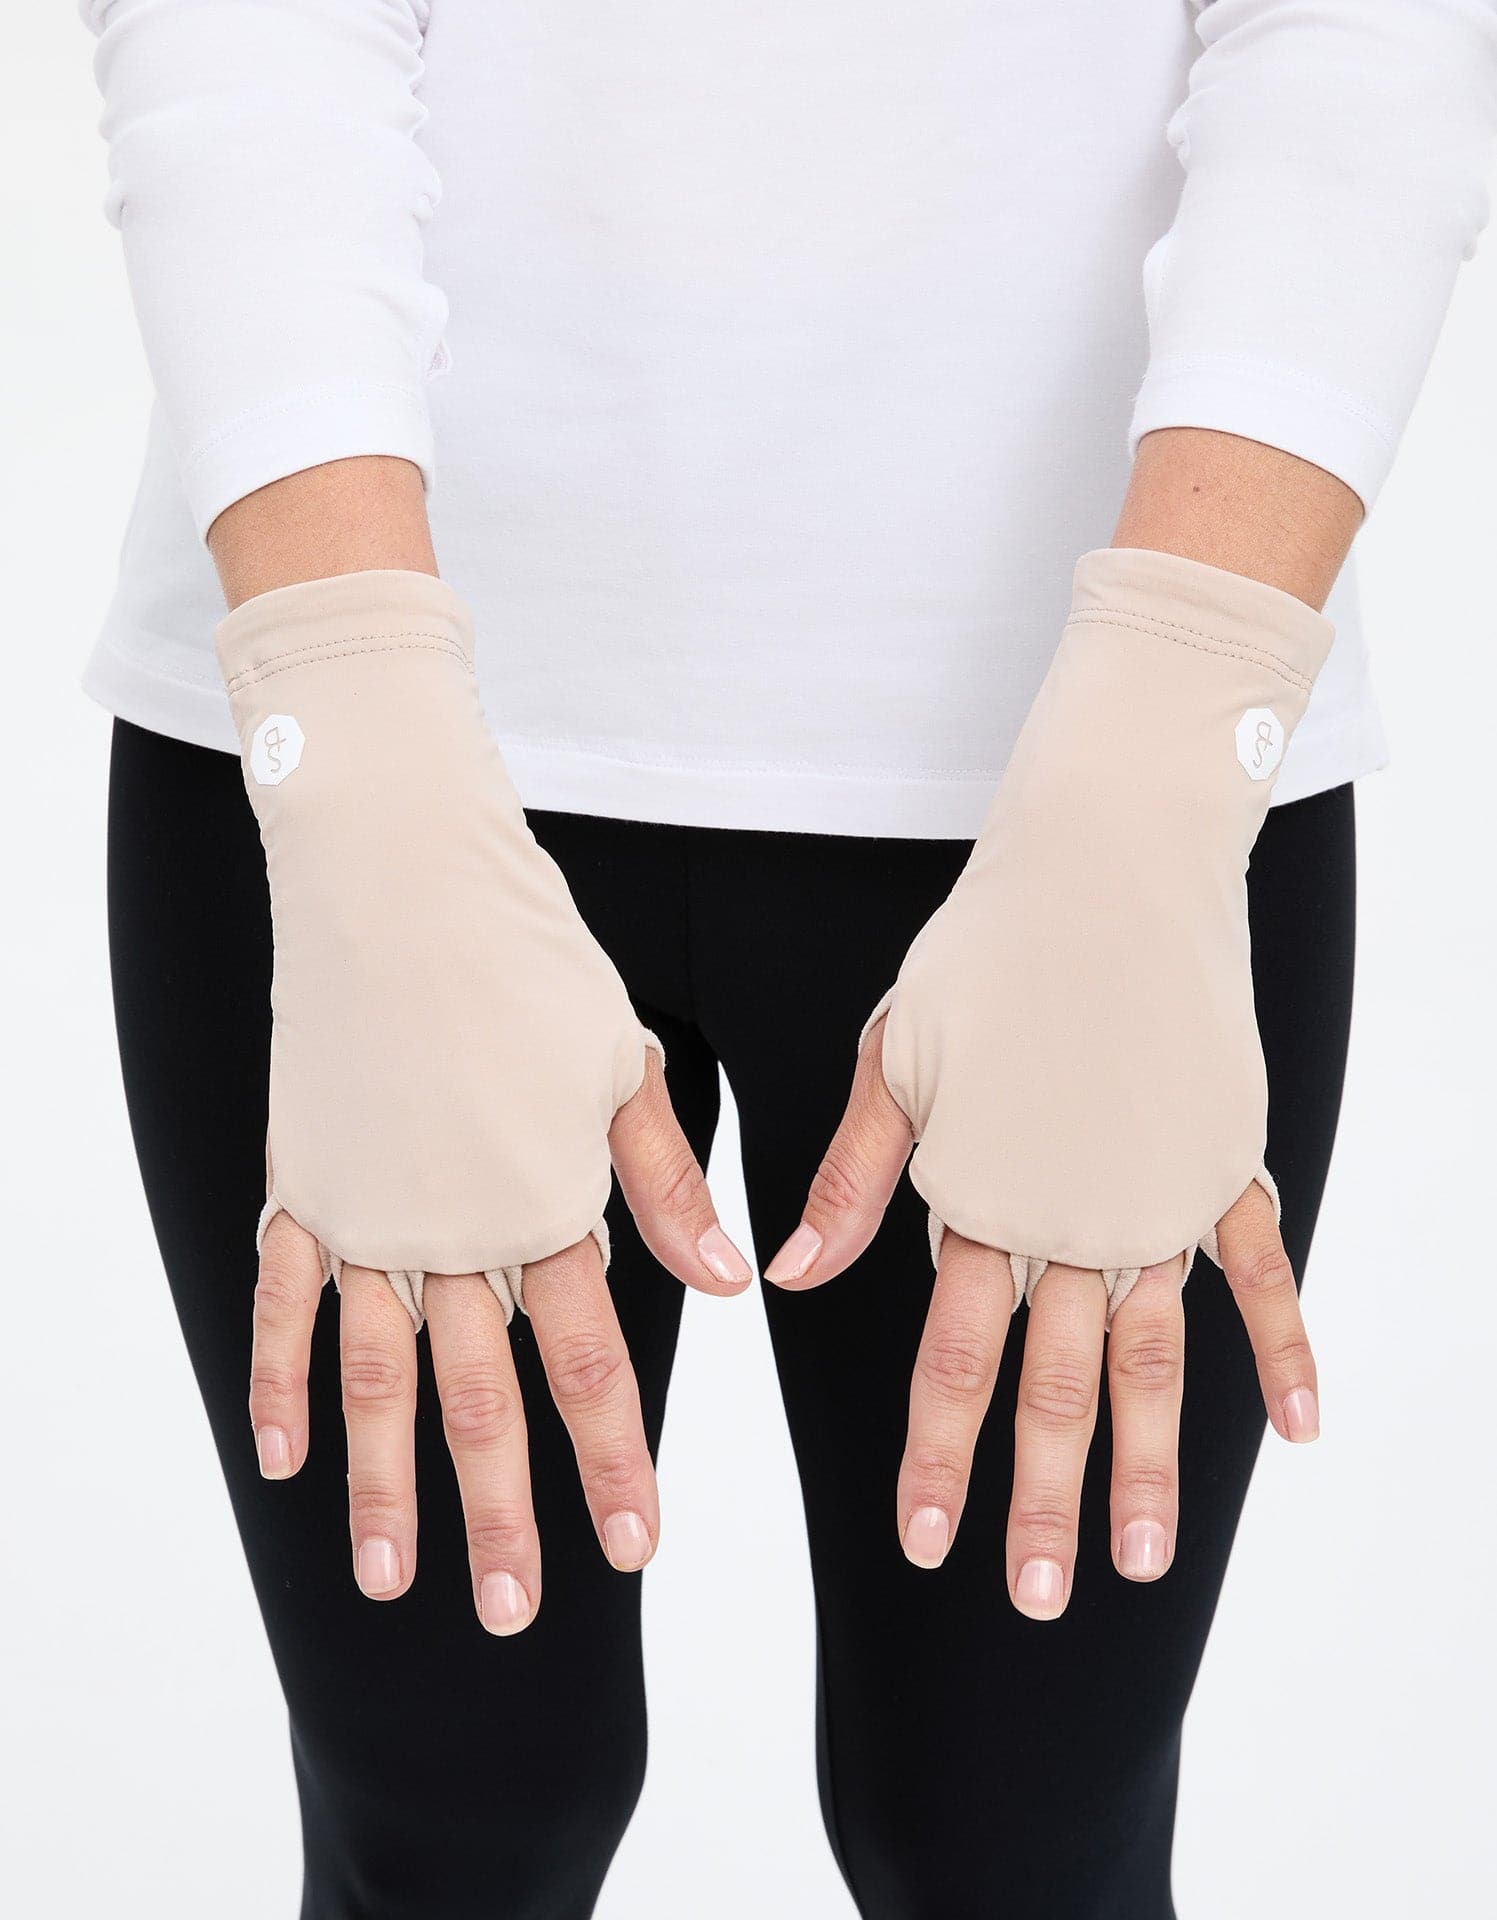 Men's UPF50+ Palmless Gloves | Cooling Sun Protection for Hands Black